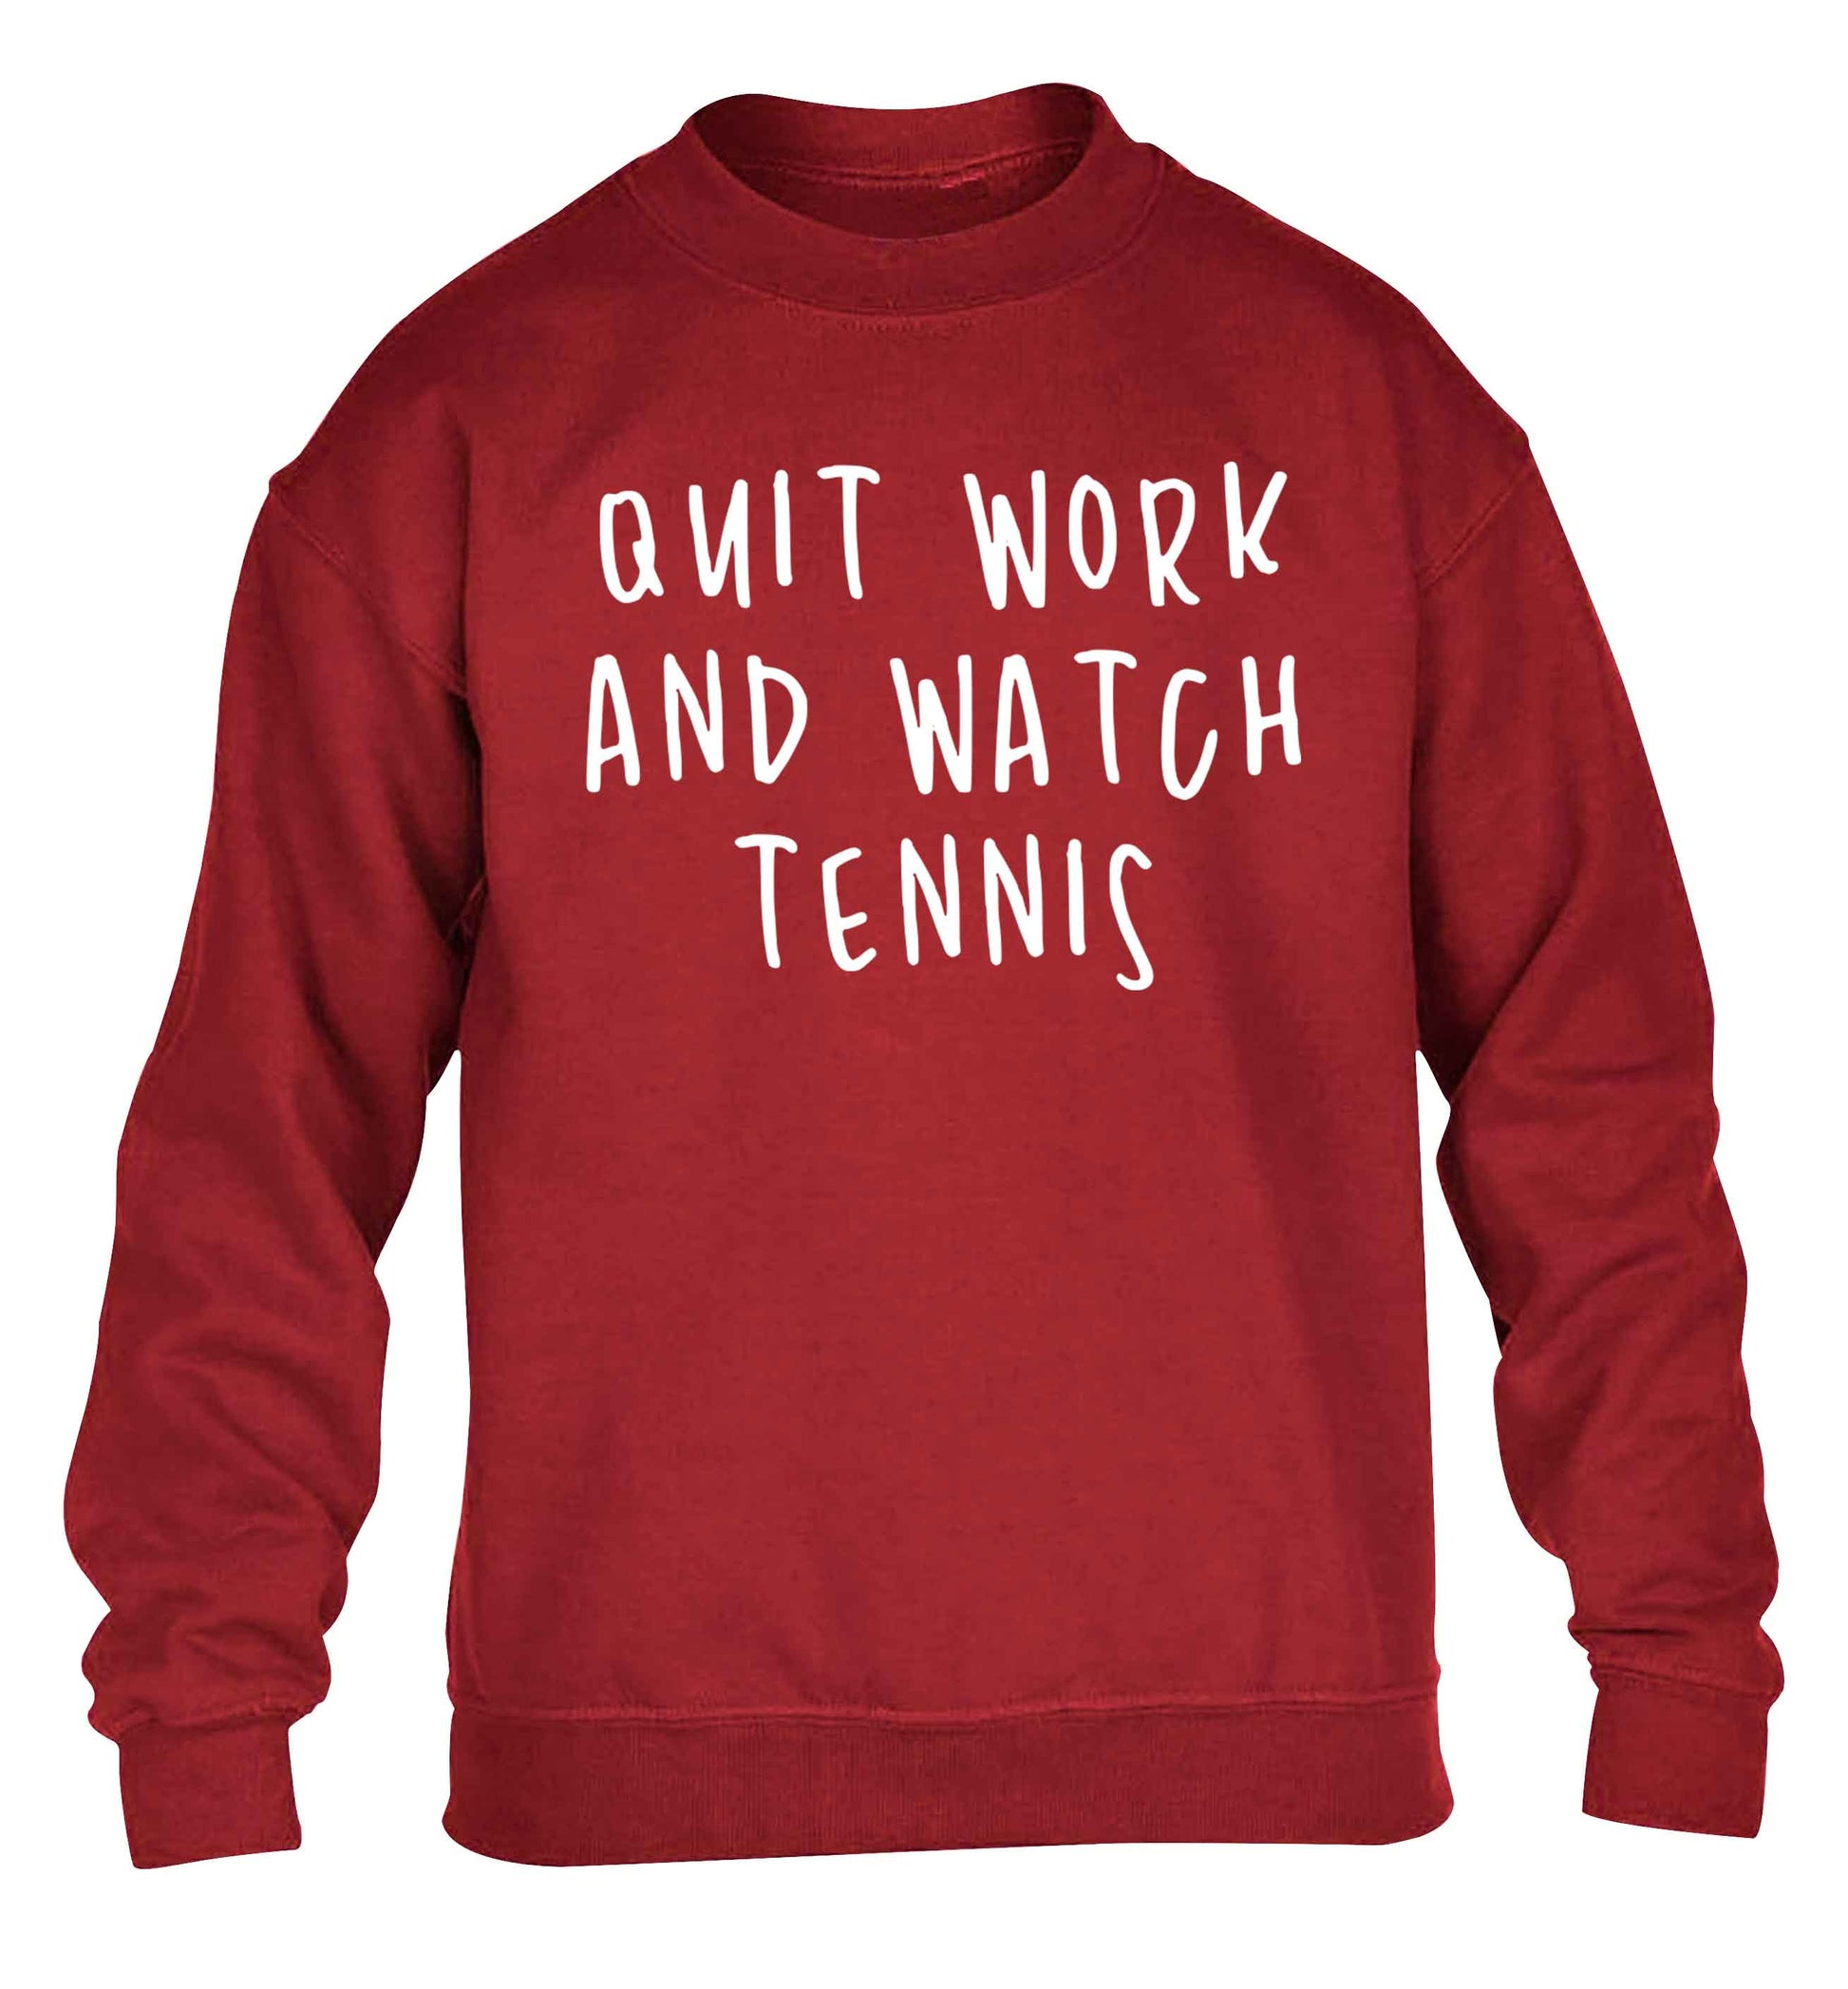 Quit work and watch tennis children's grey sweater 12-13 Years